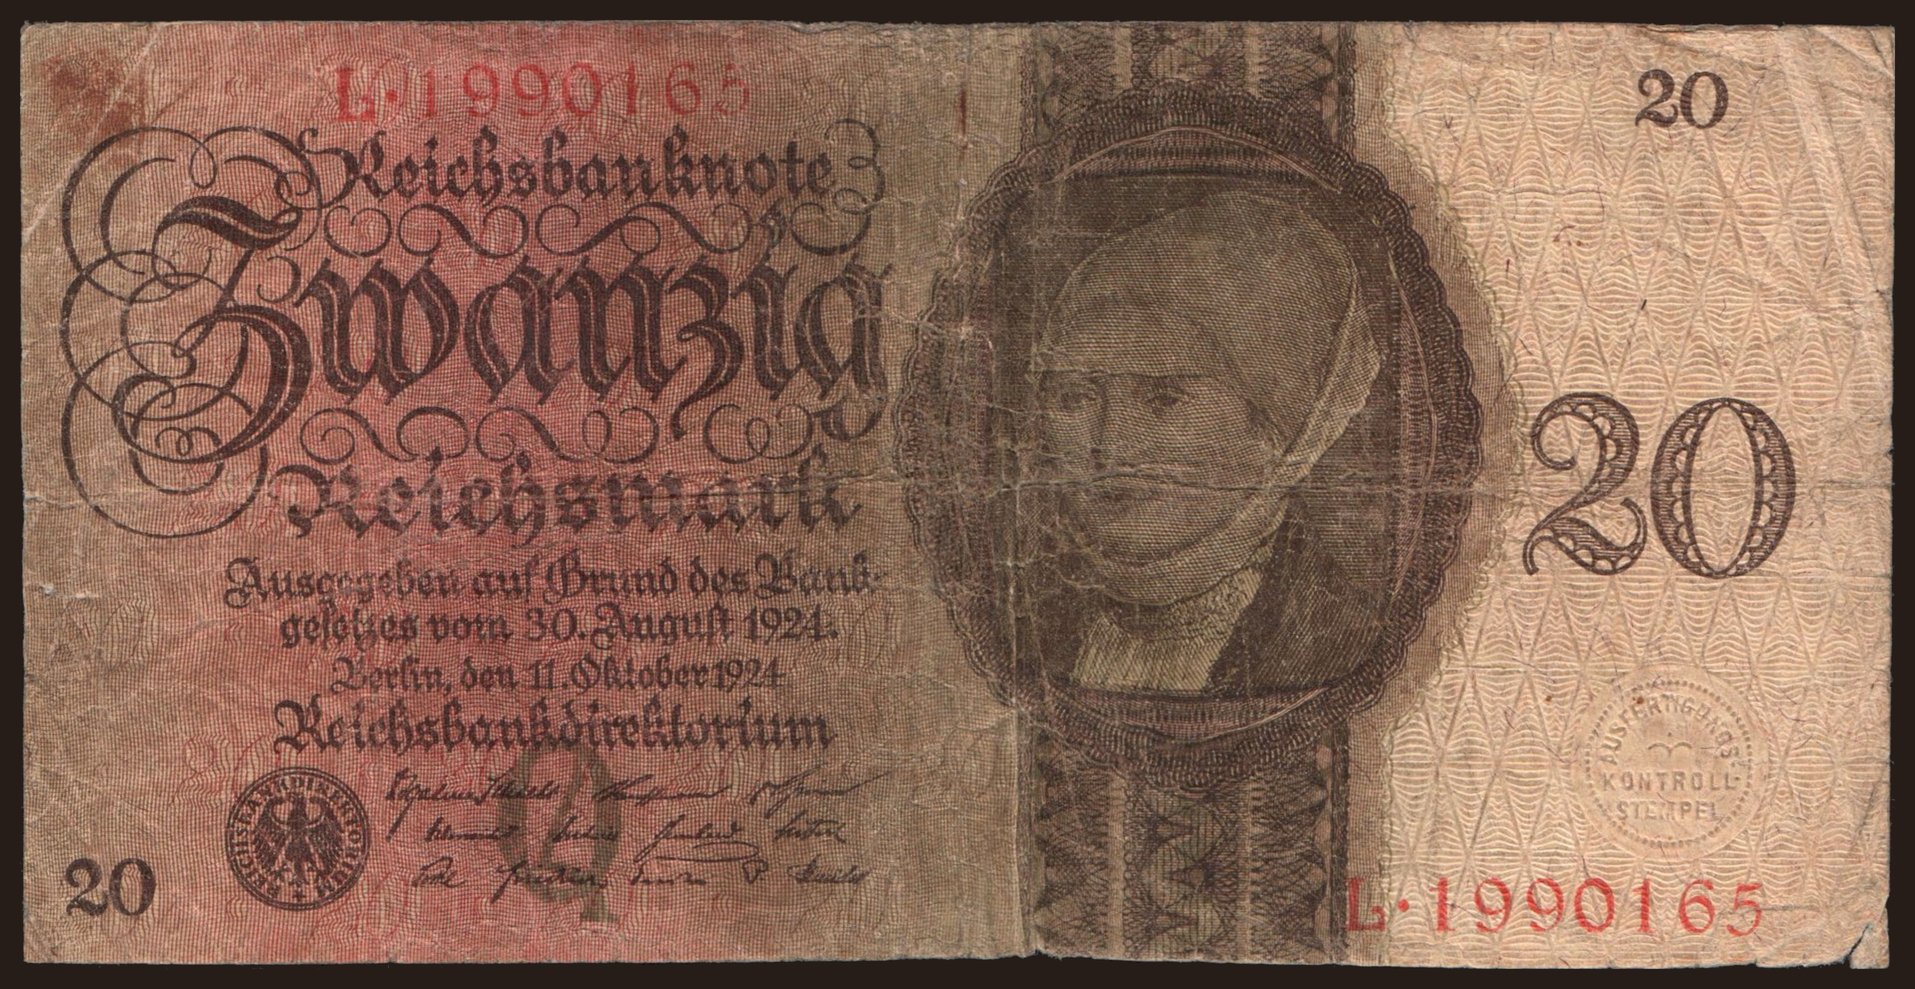 20 Reichsmark, 1924, Q/L